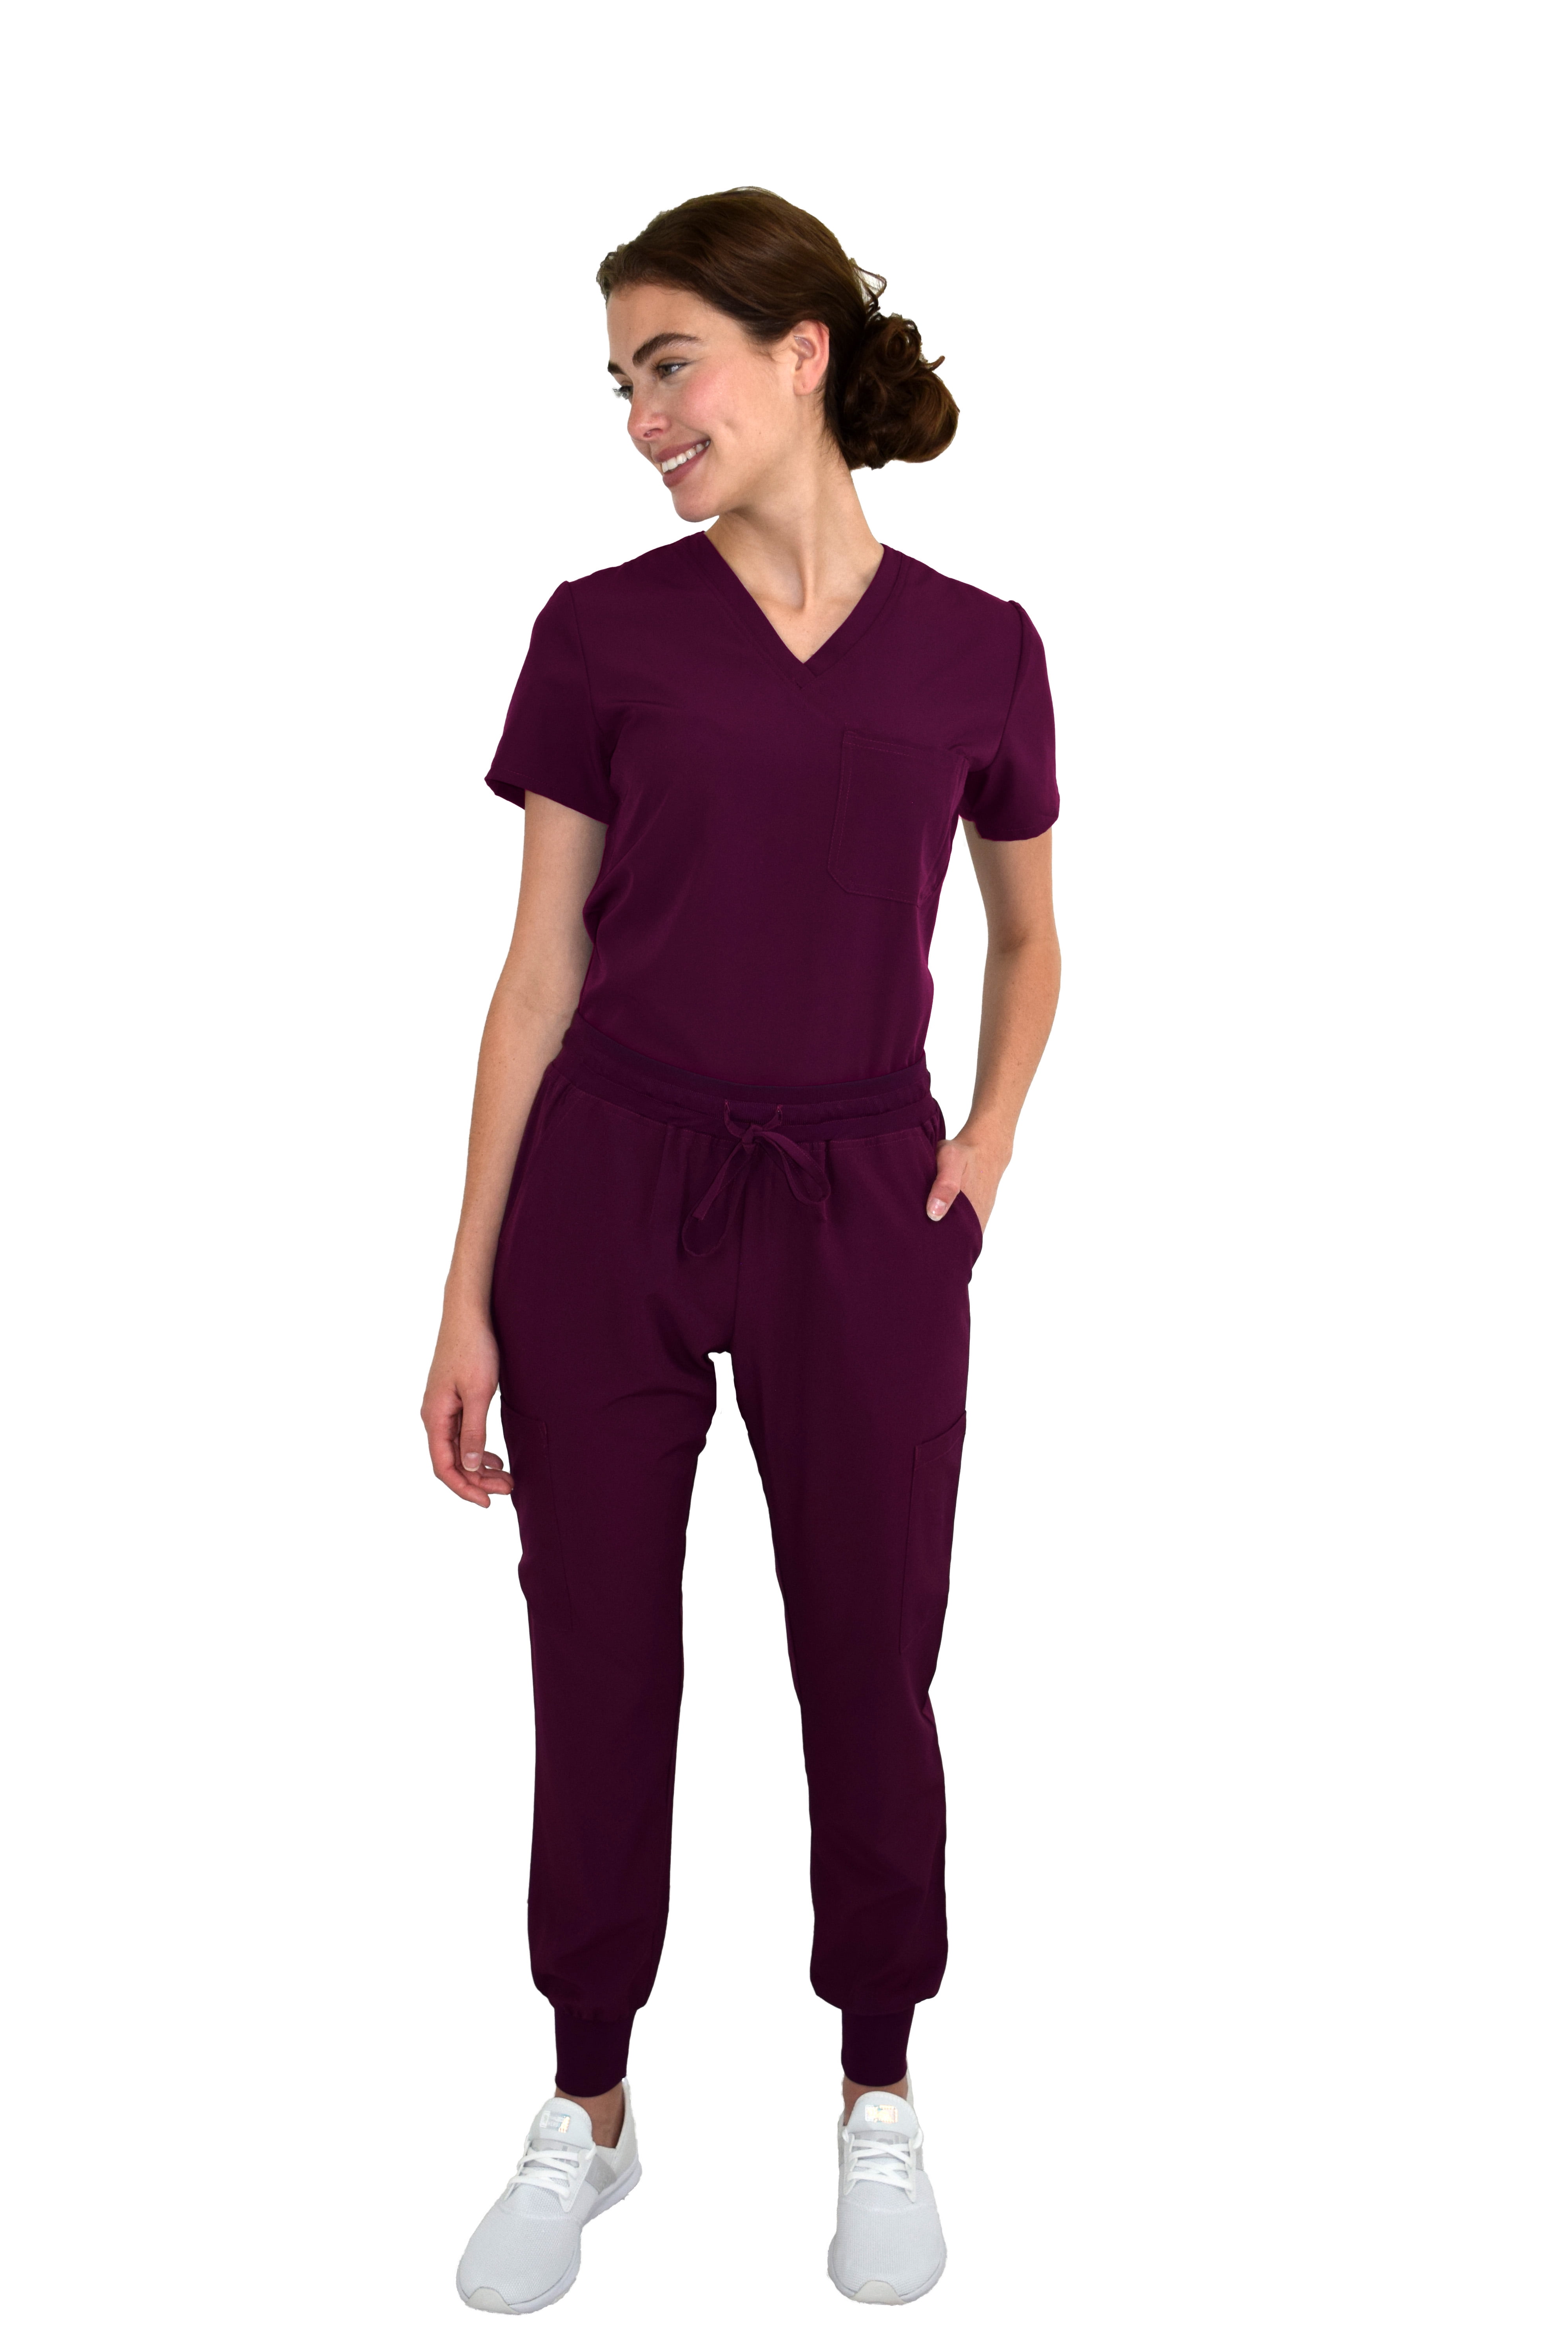 Women's Tuck-In Top/Jogger Scrub Set Medical Nursing GT 4FLEX Top and ...